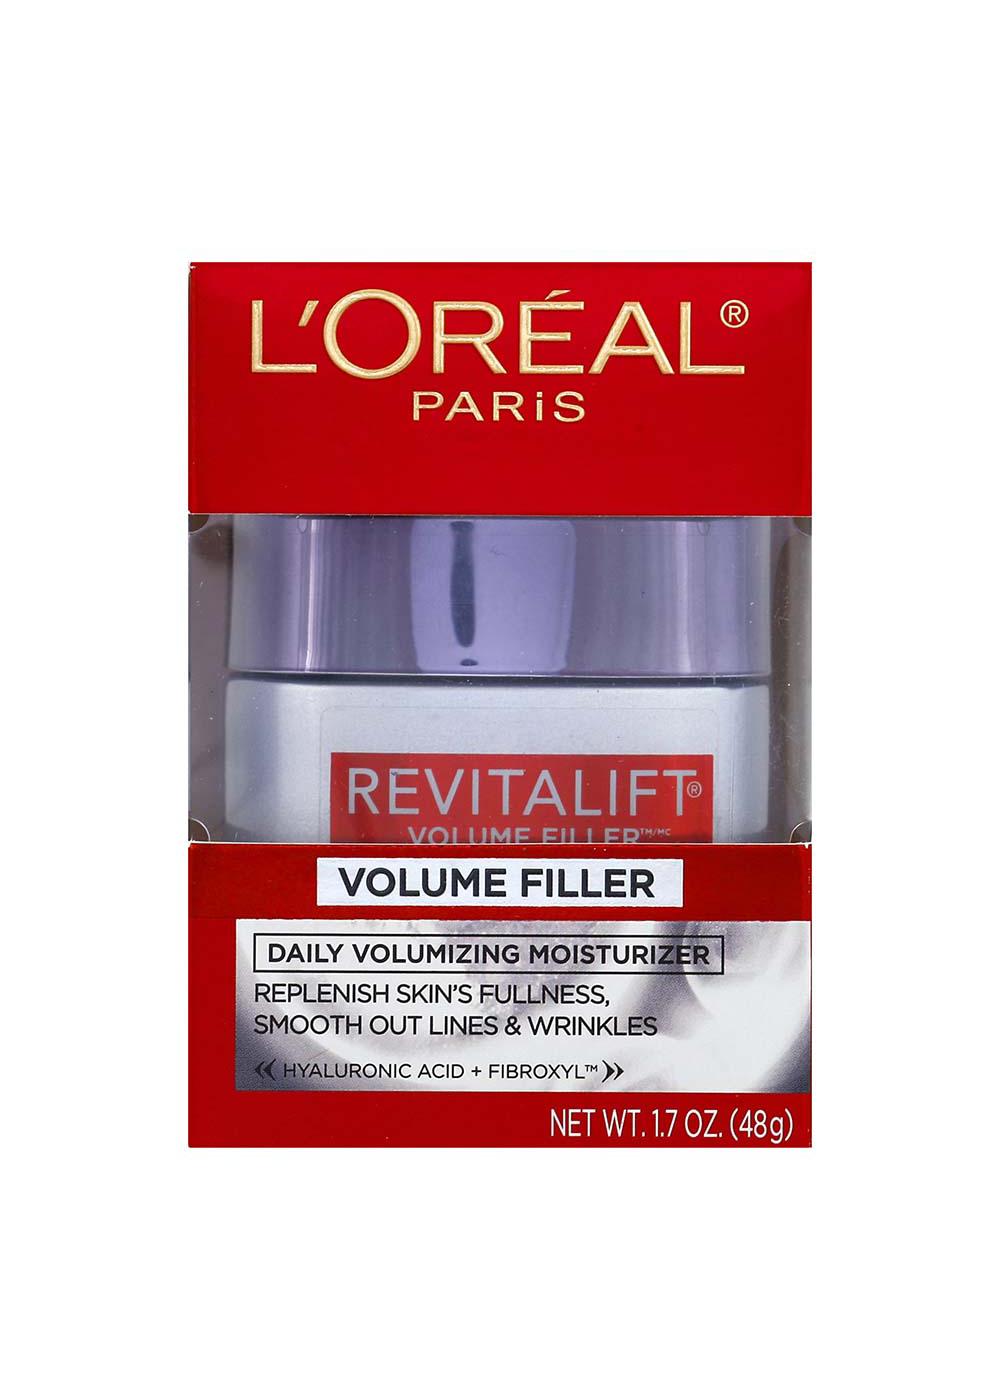 L'Oréal Paris Revitalift Volume Filler Daily Volumizing Moisturizer; image 1 of 2